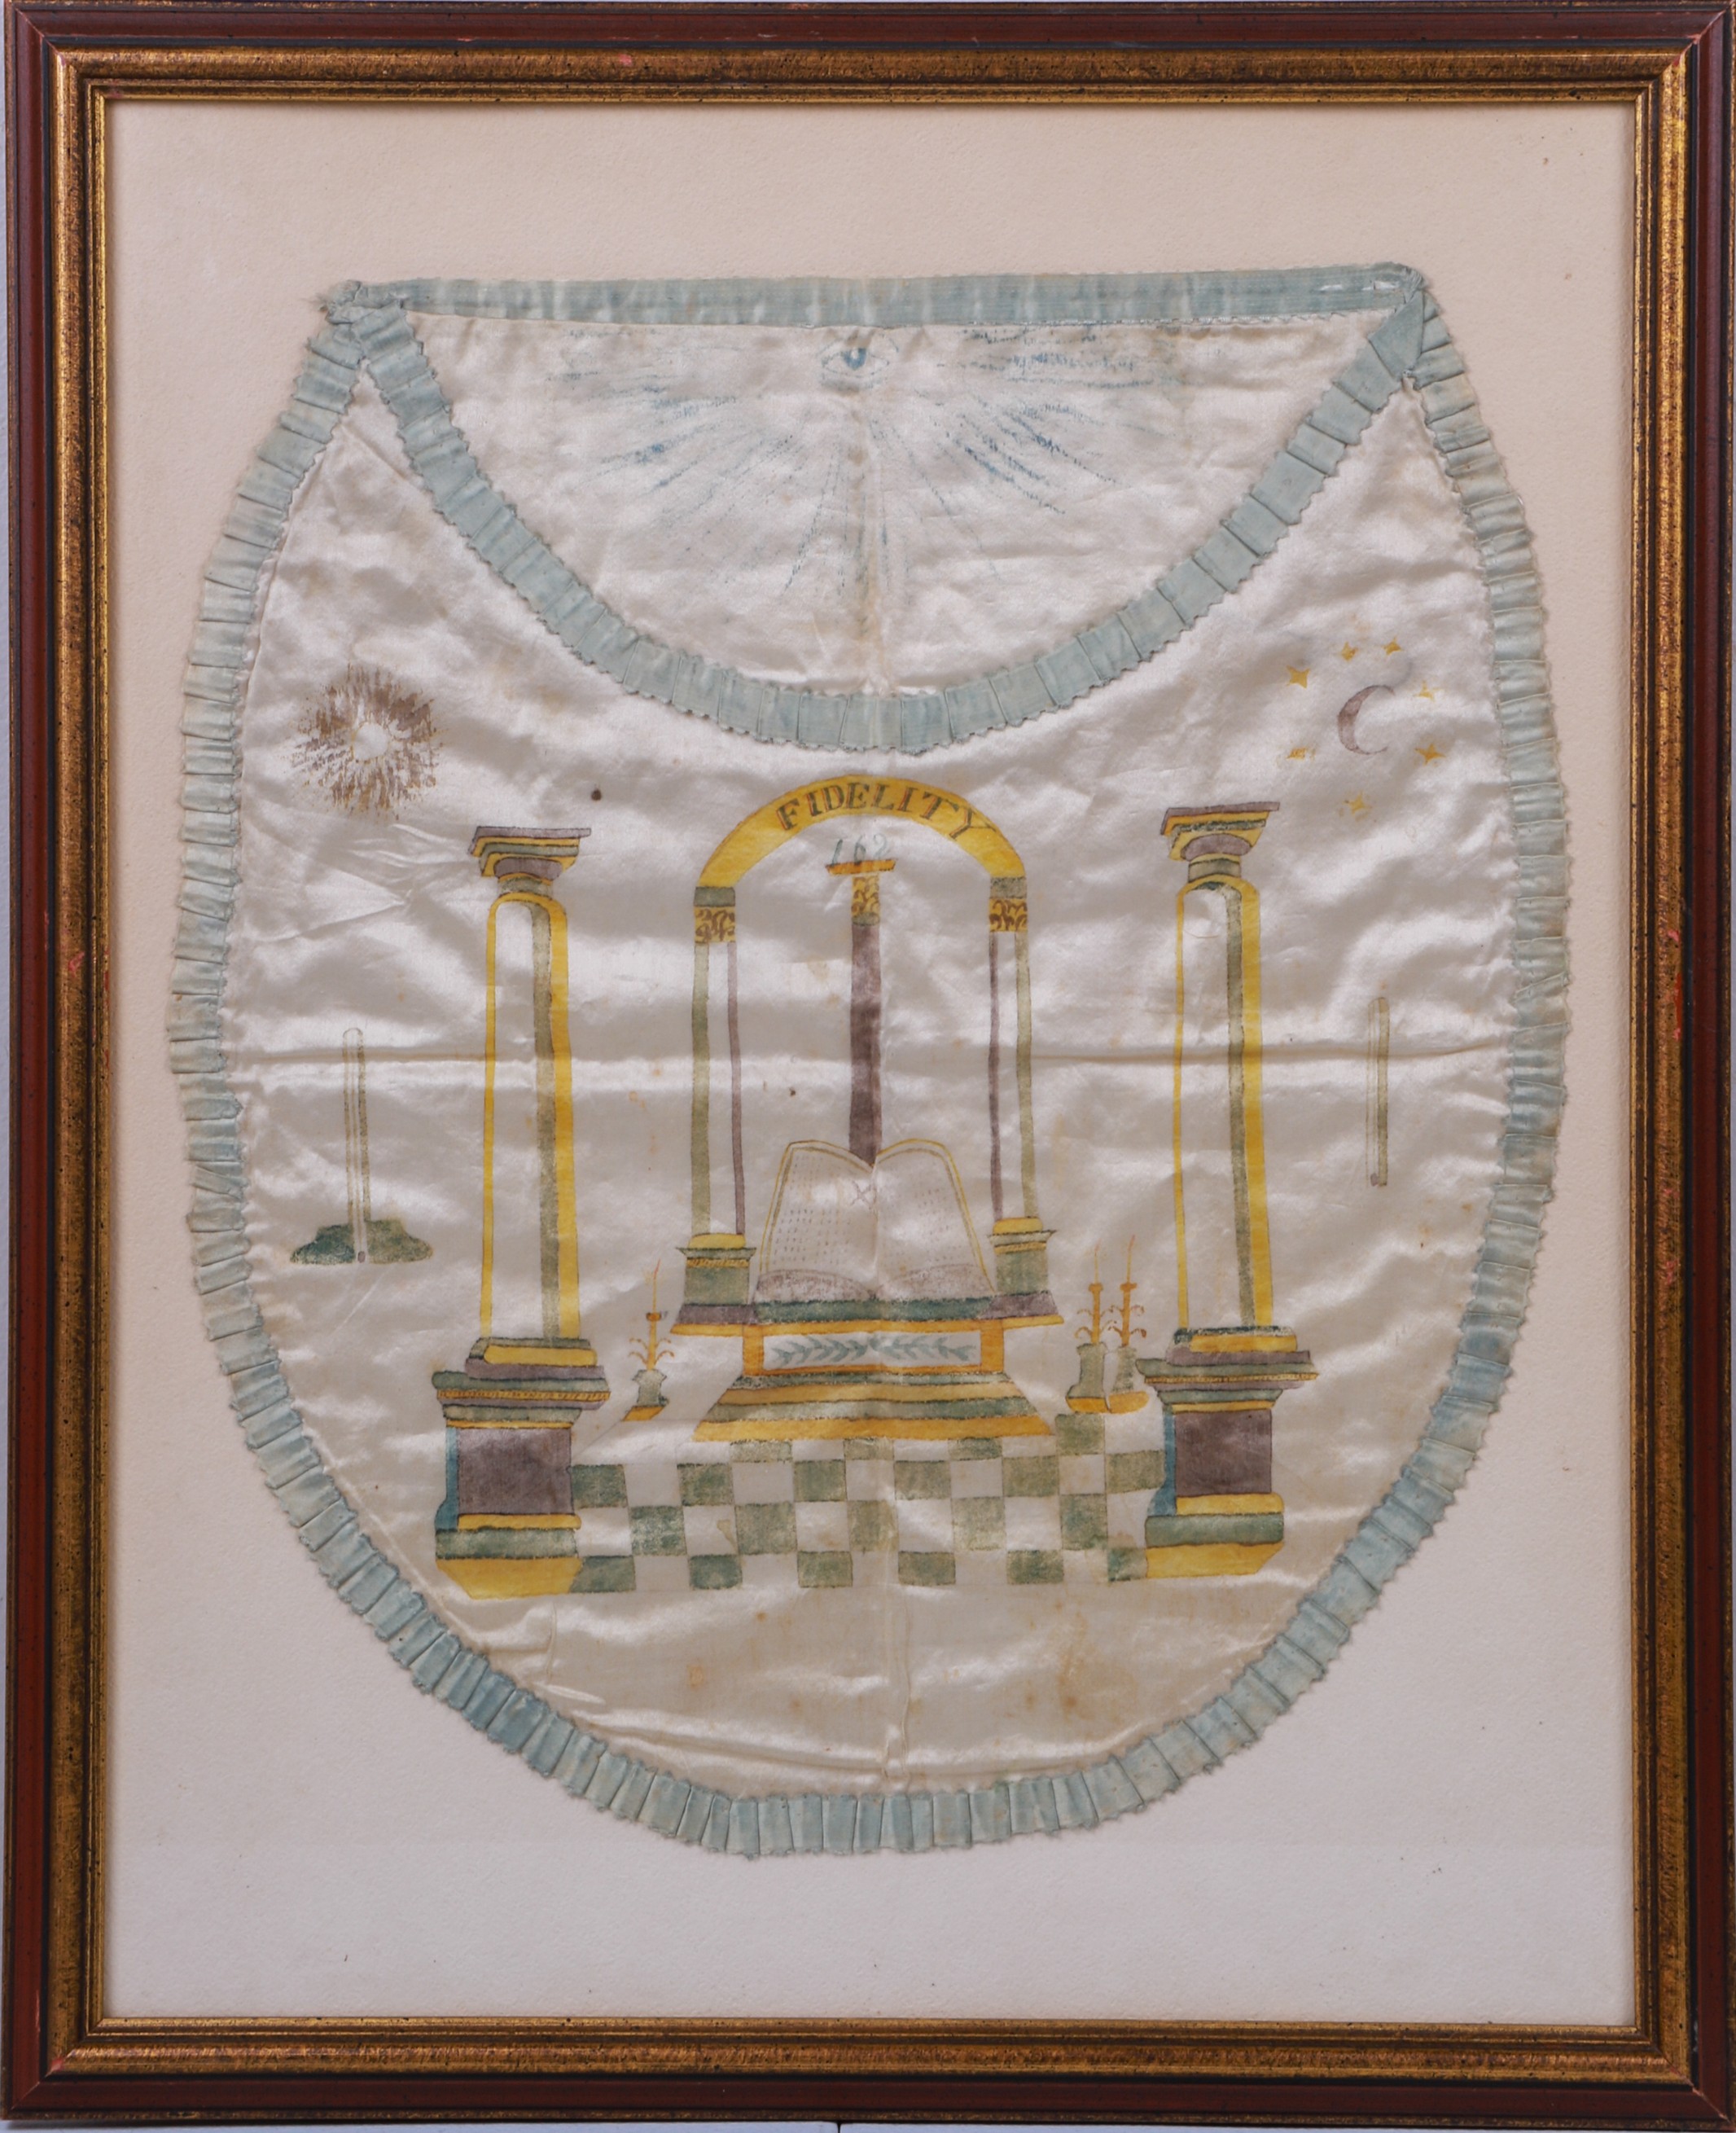 Framed Masonic apron, hand painted on